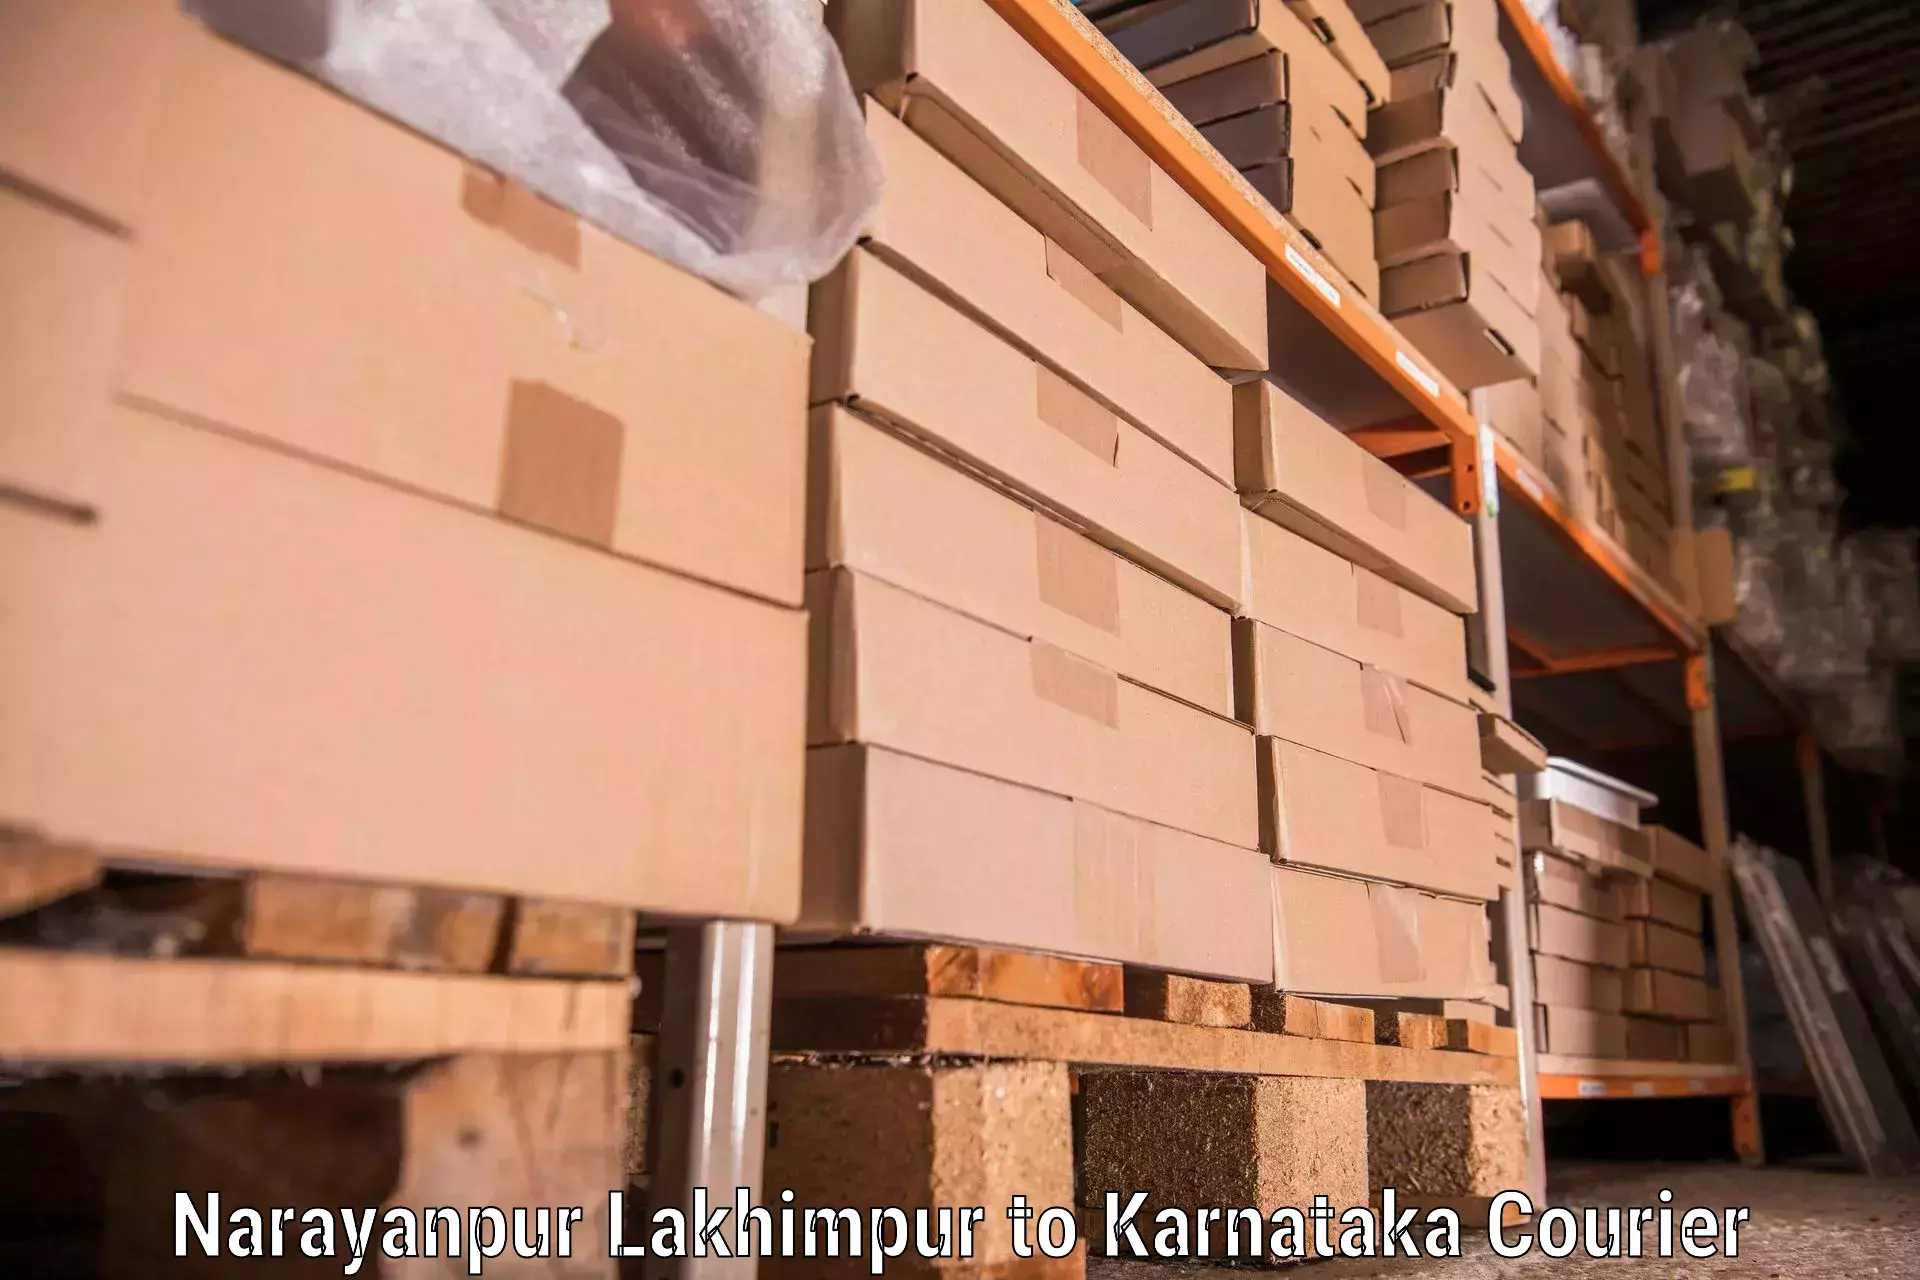 Furniture moving specialists Narayanpur Lakhimpur to Tavarekere